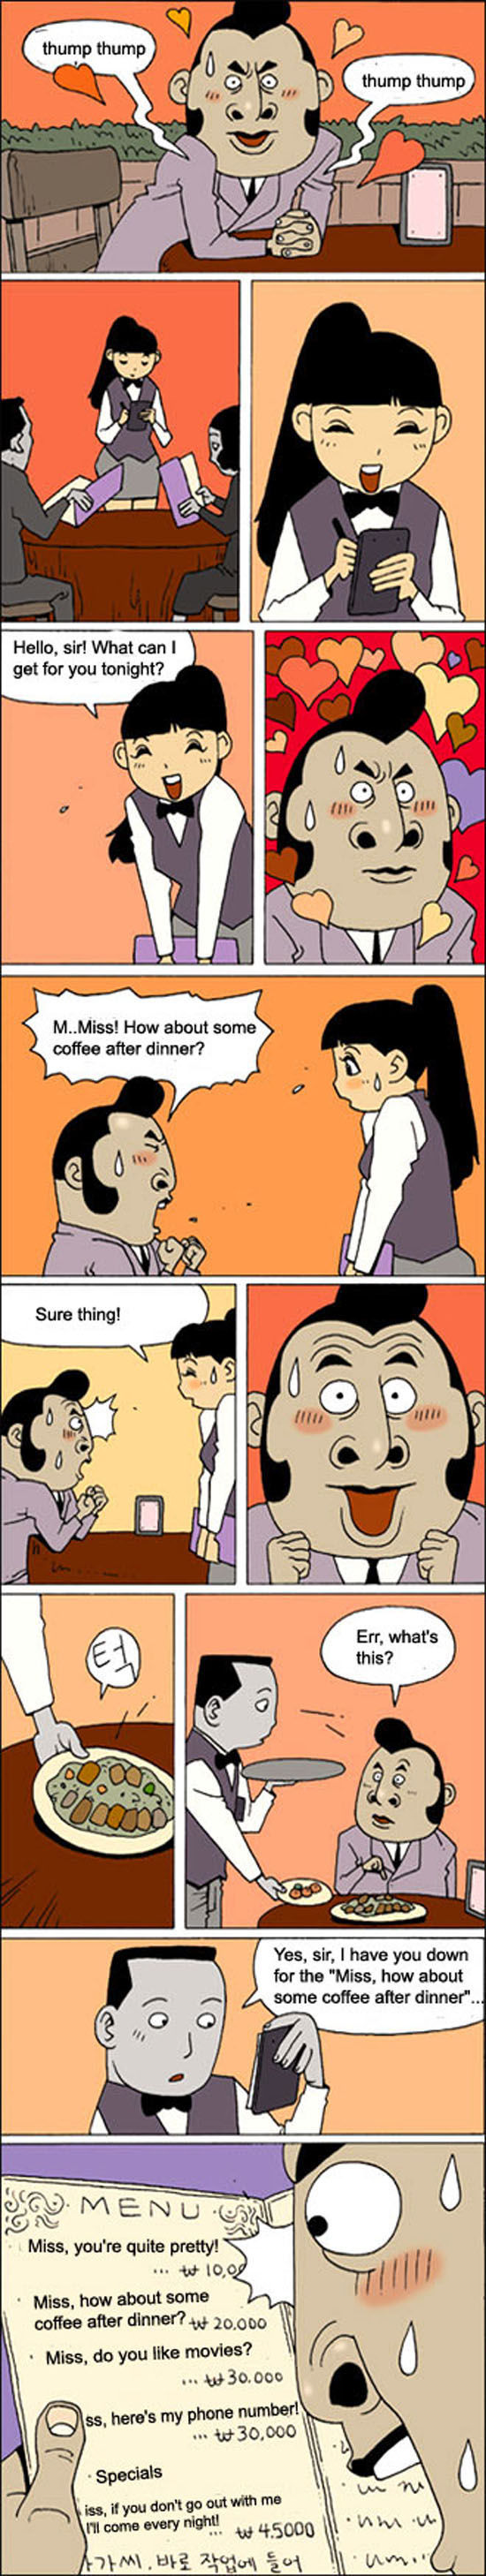 Funny Korean Comic Strips. Part 2